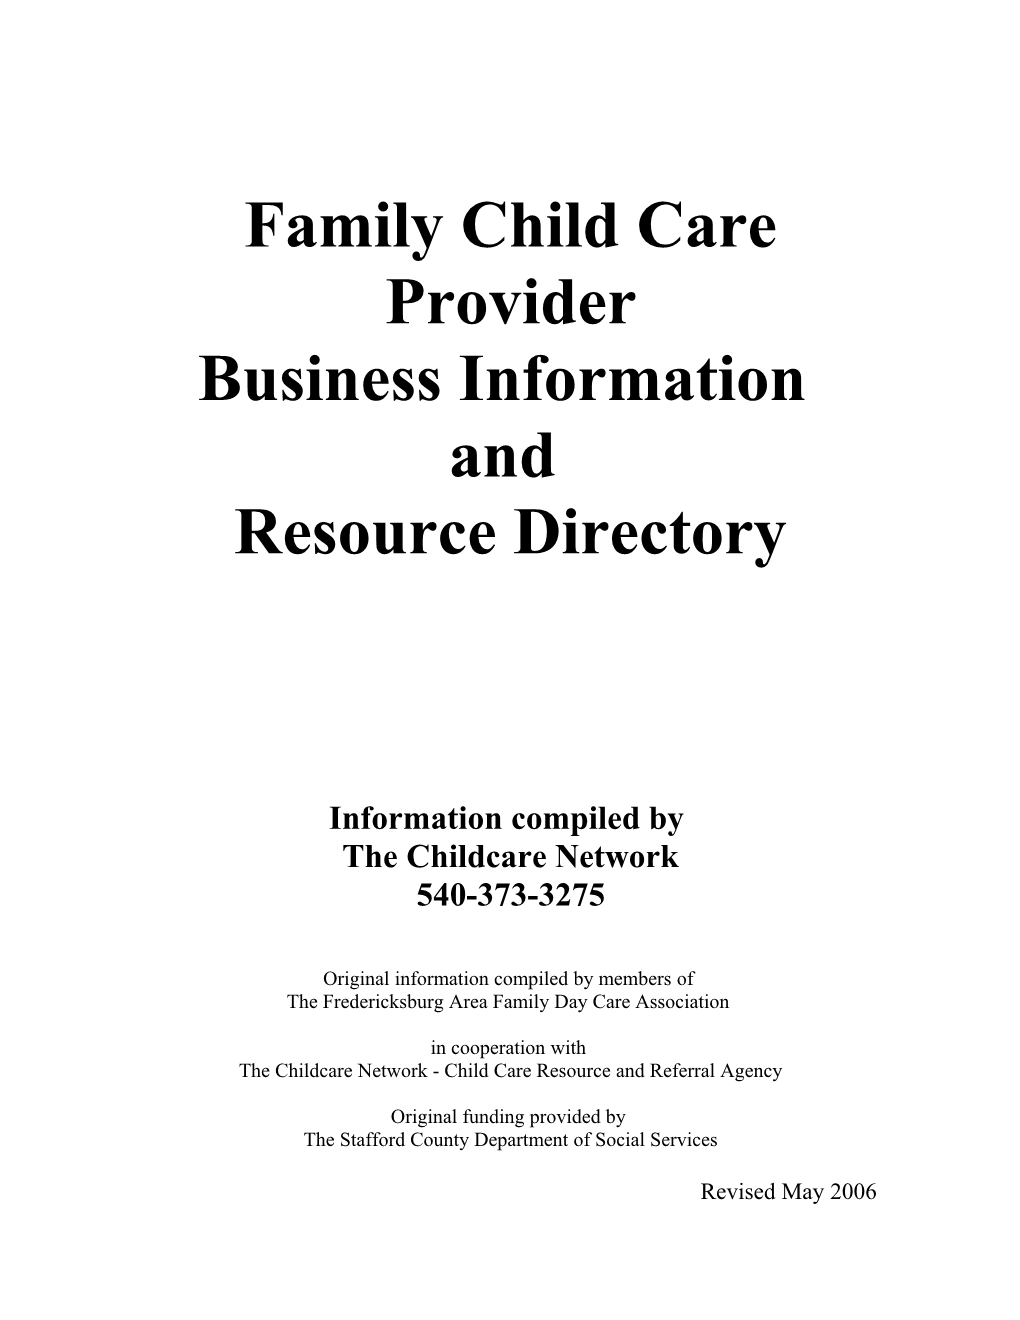 Family Child Care Provider